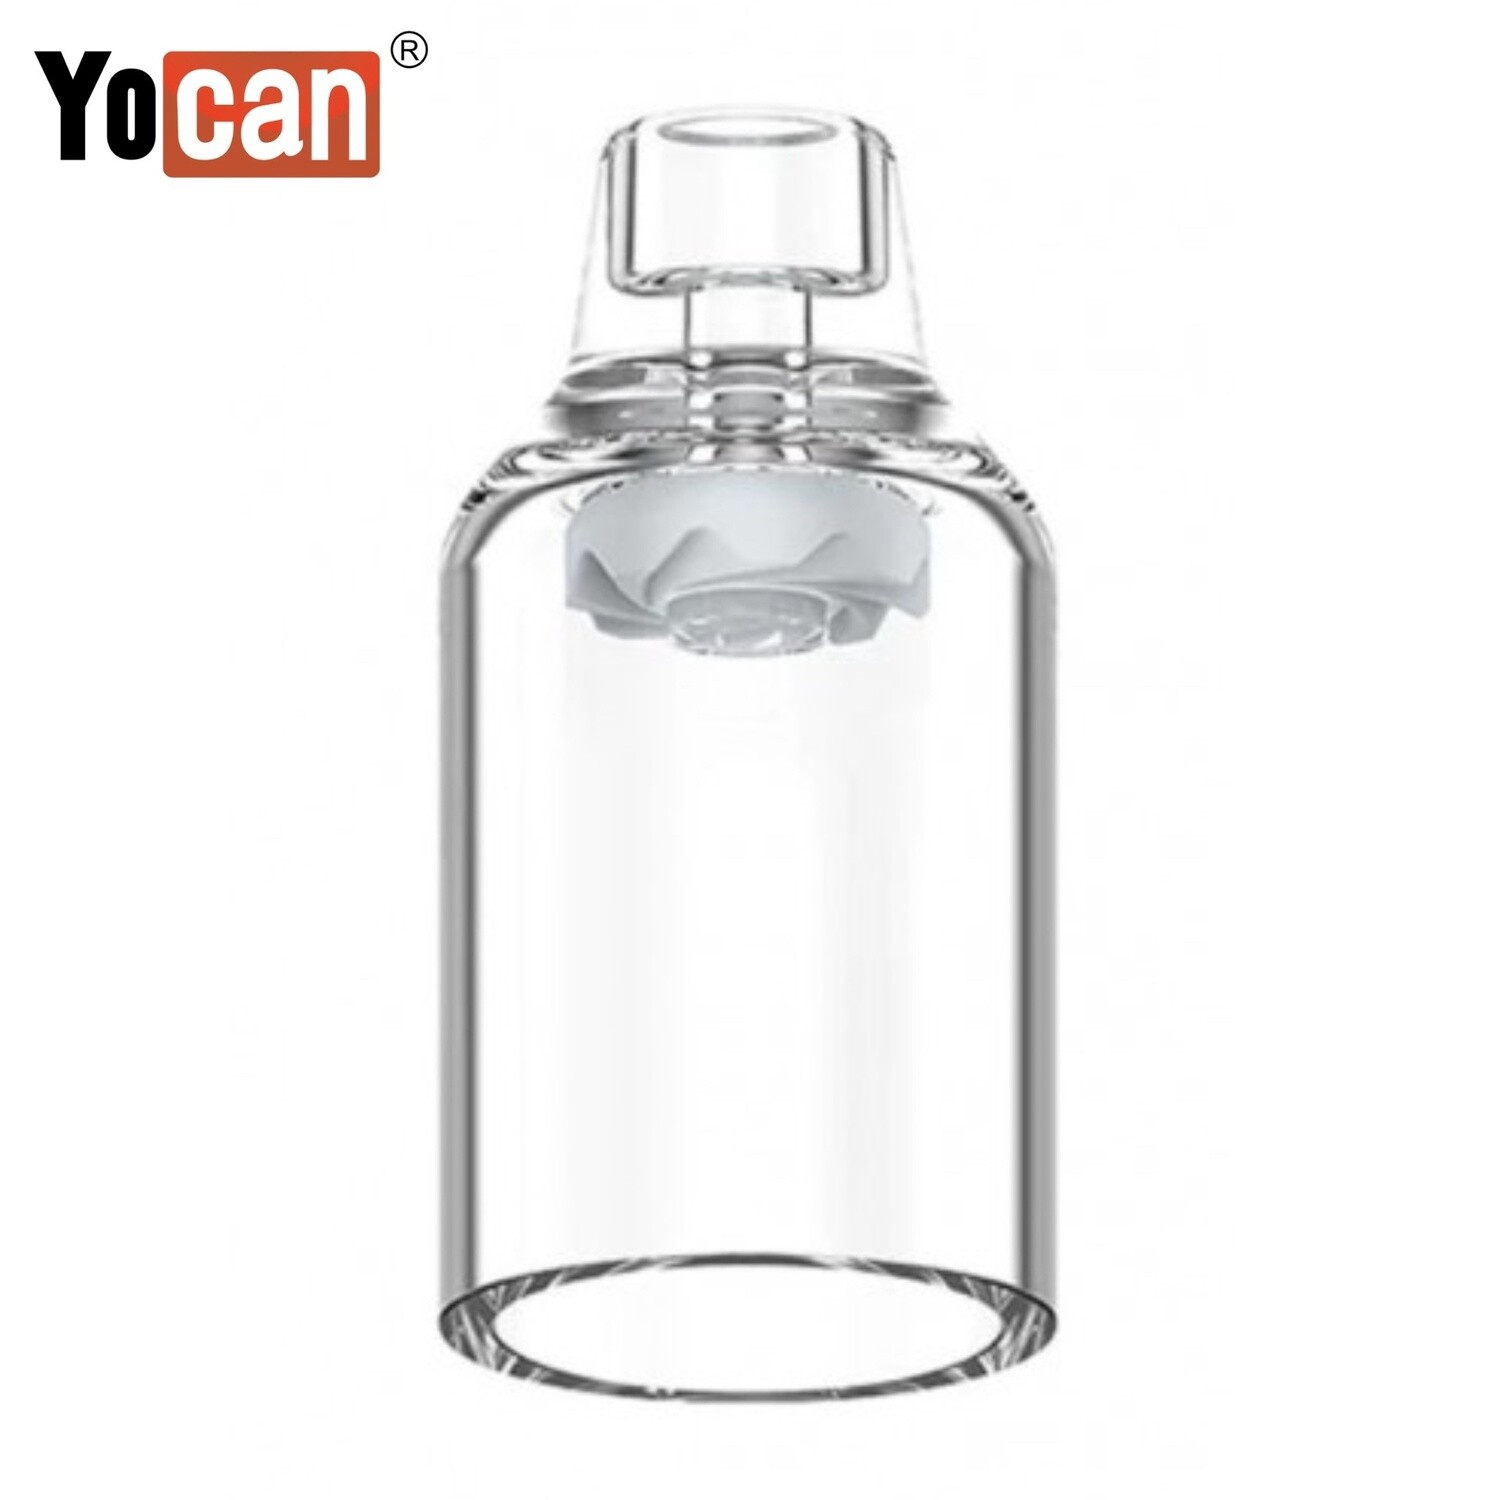 Yocan® Orbit Glass